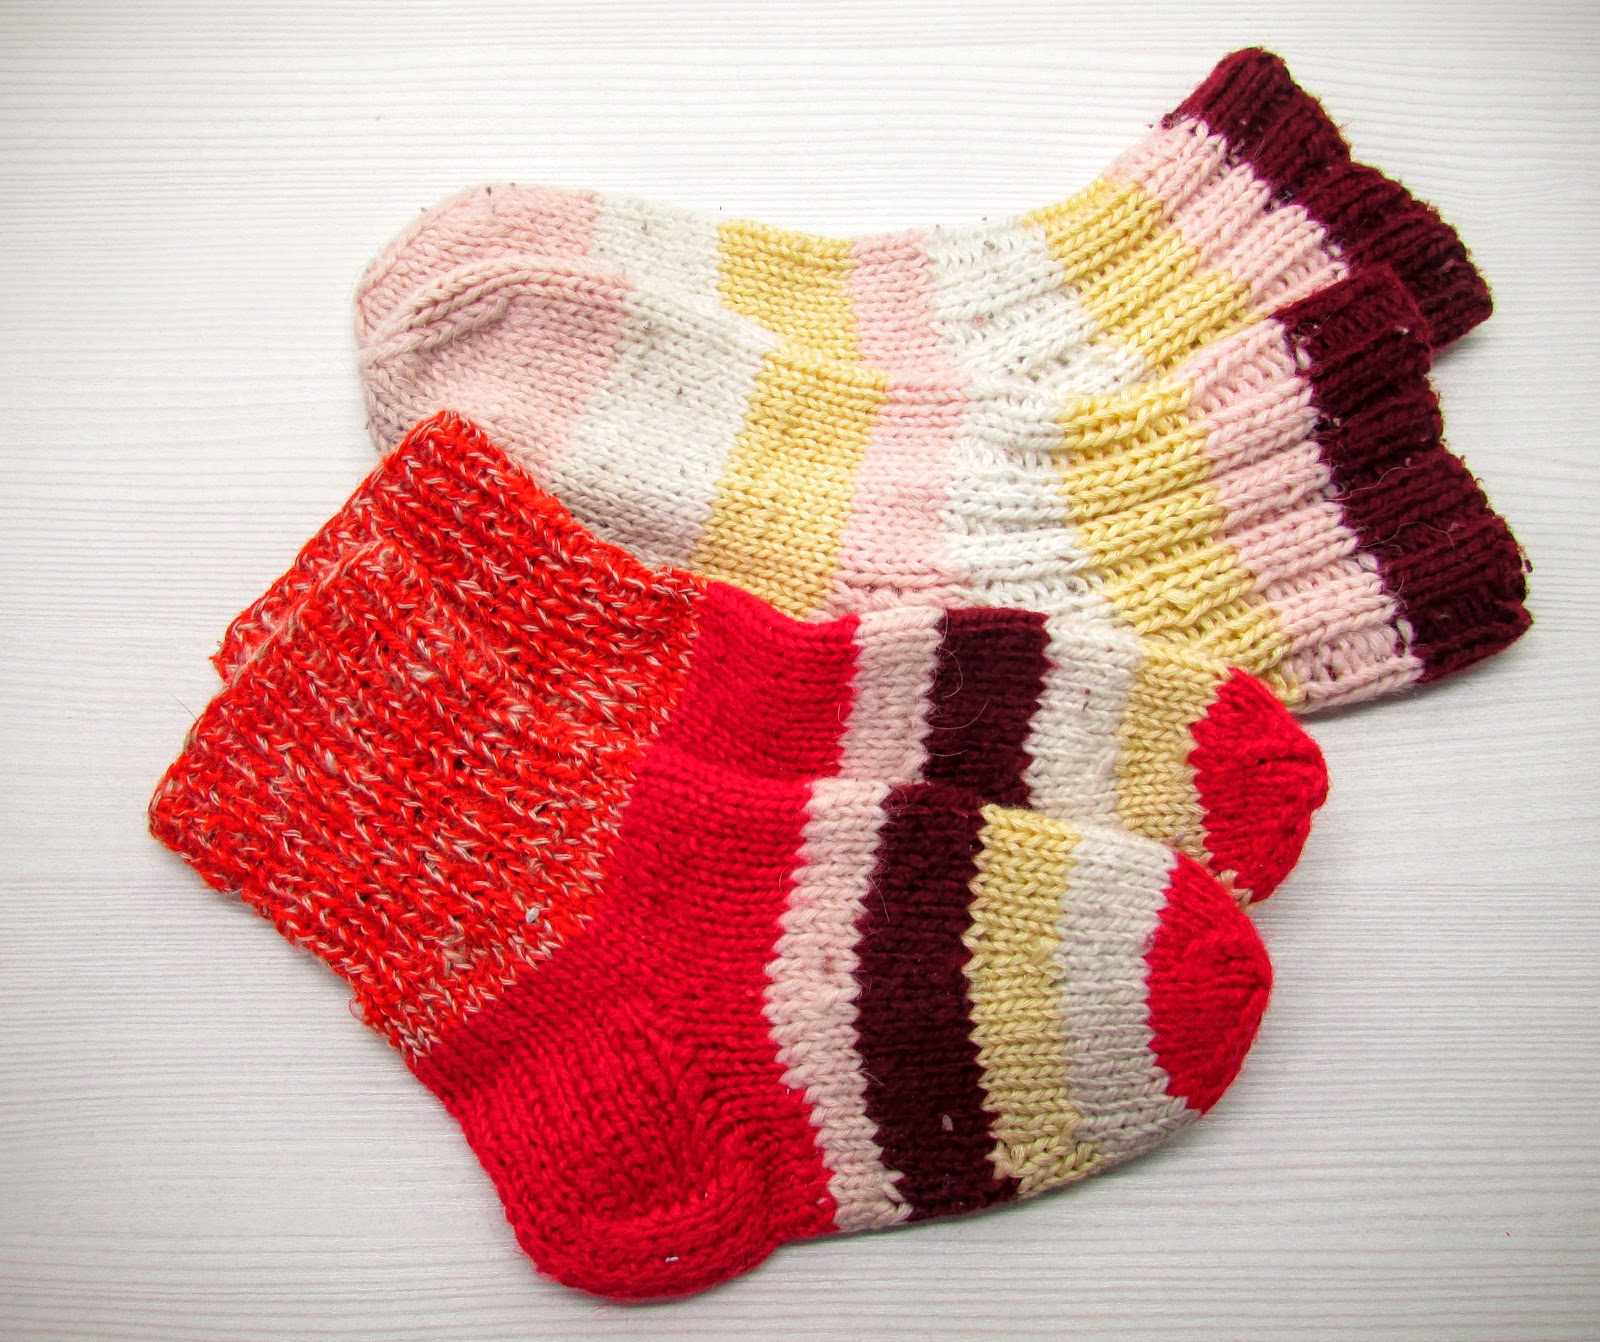 Что такое бабушка теплые носочки. Носочки для бабушки теплые 20 века. Носки у бабушек на рынке. Игра бабушкины носки